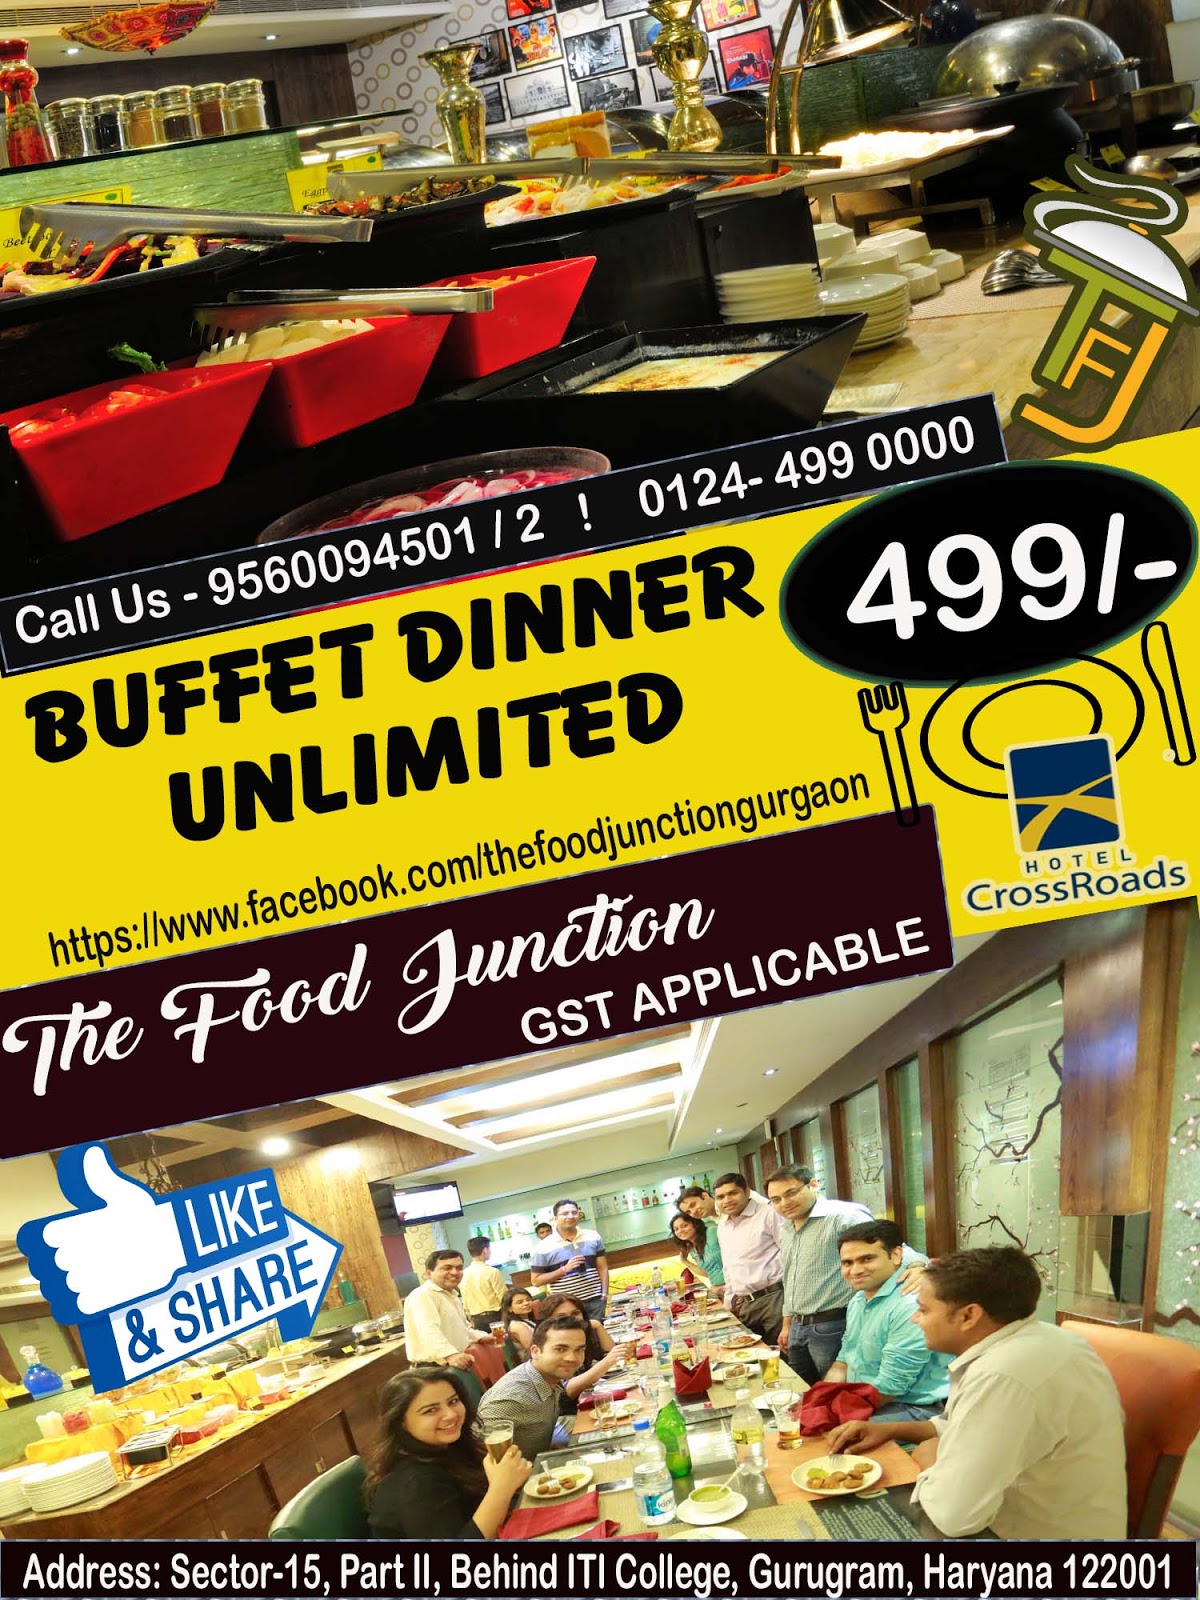 Buffet Dinner In Gurgaon offer @499 at Hotel Crossroads